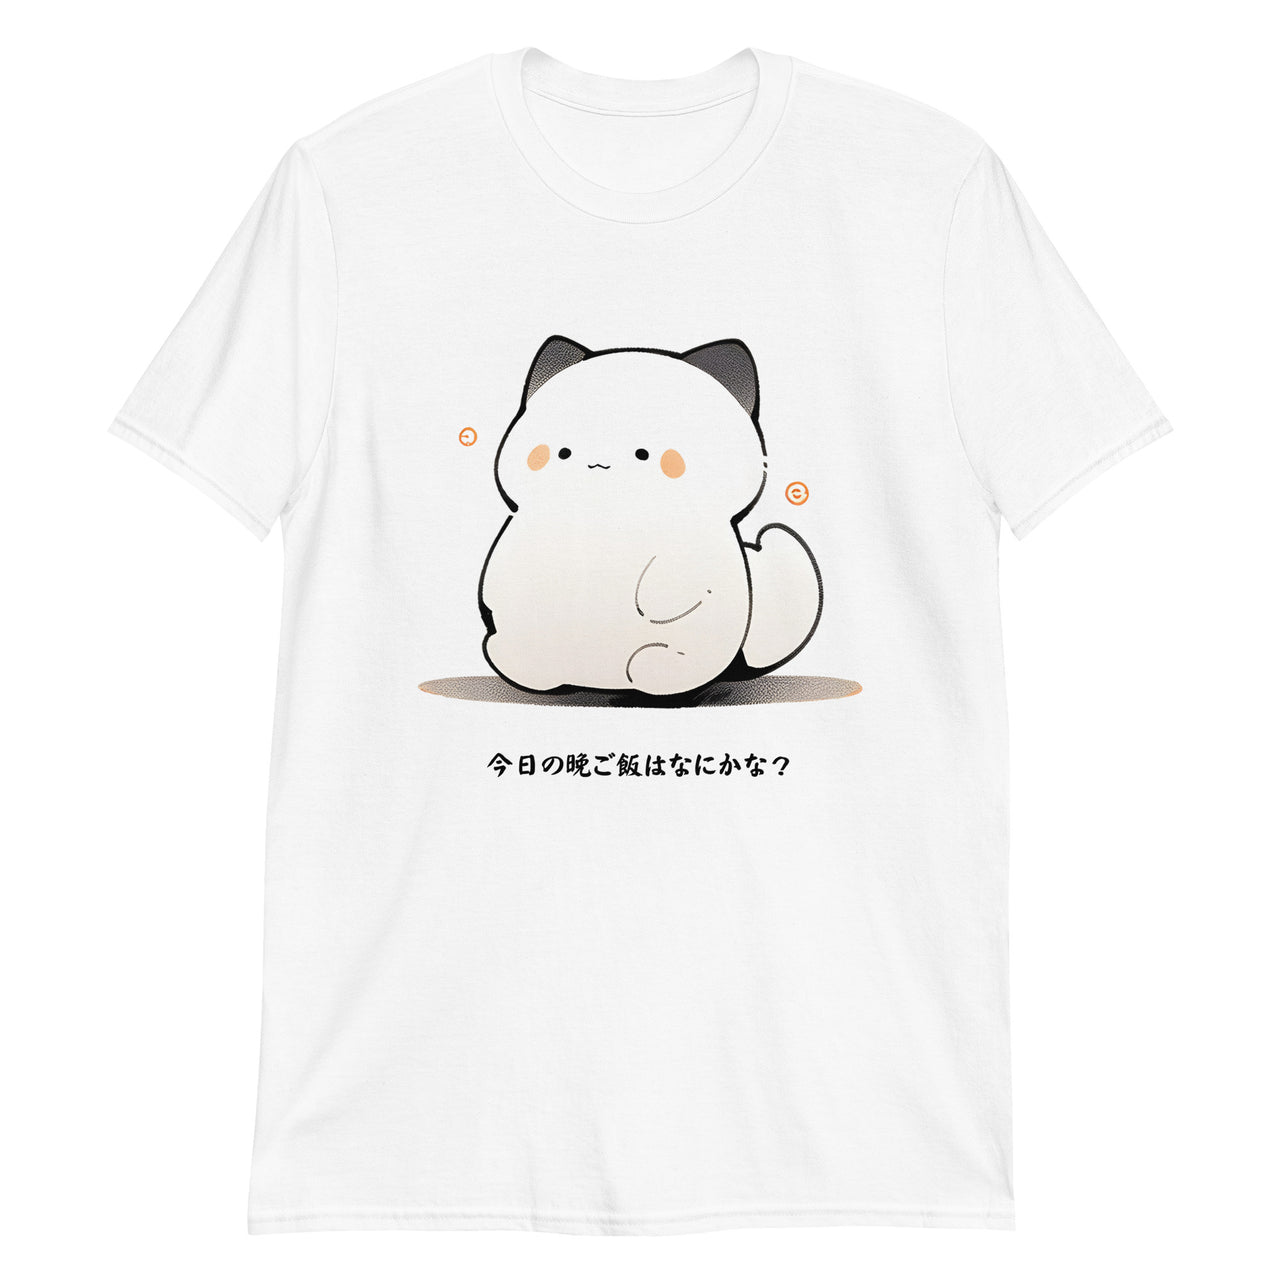 Cute Manga Cat: What's For Supper? T-Shirt